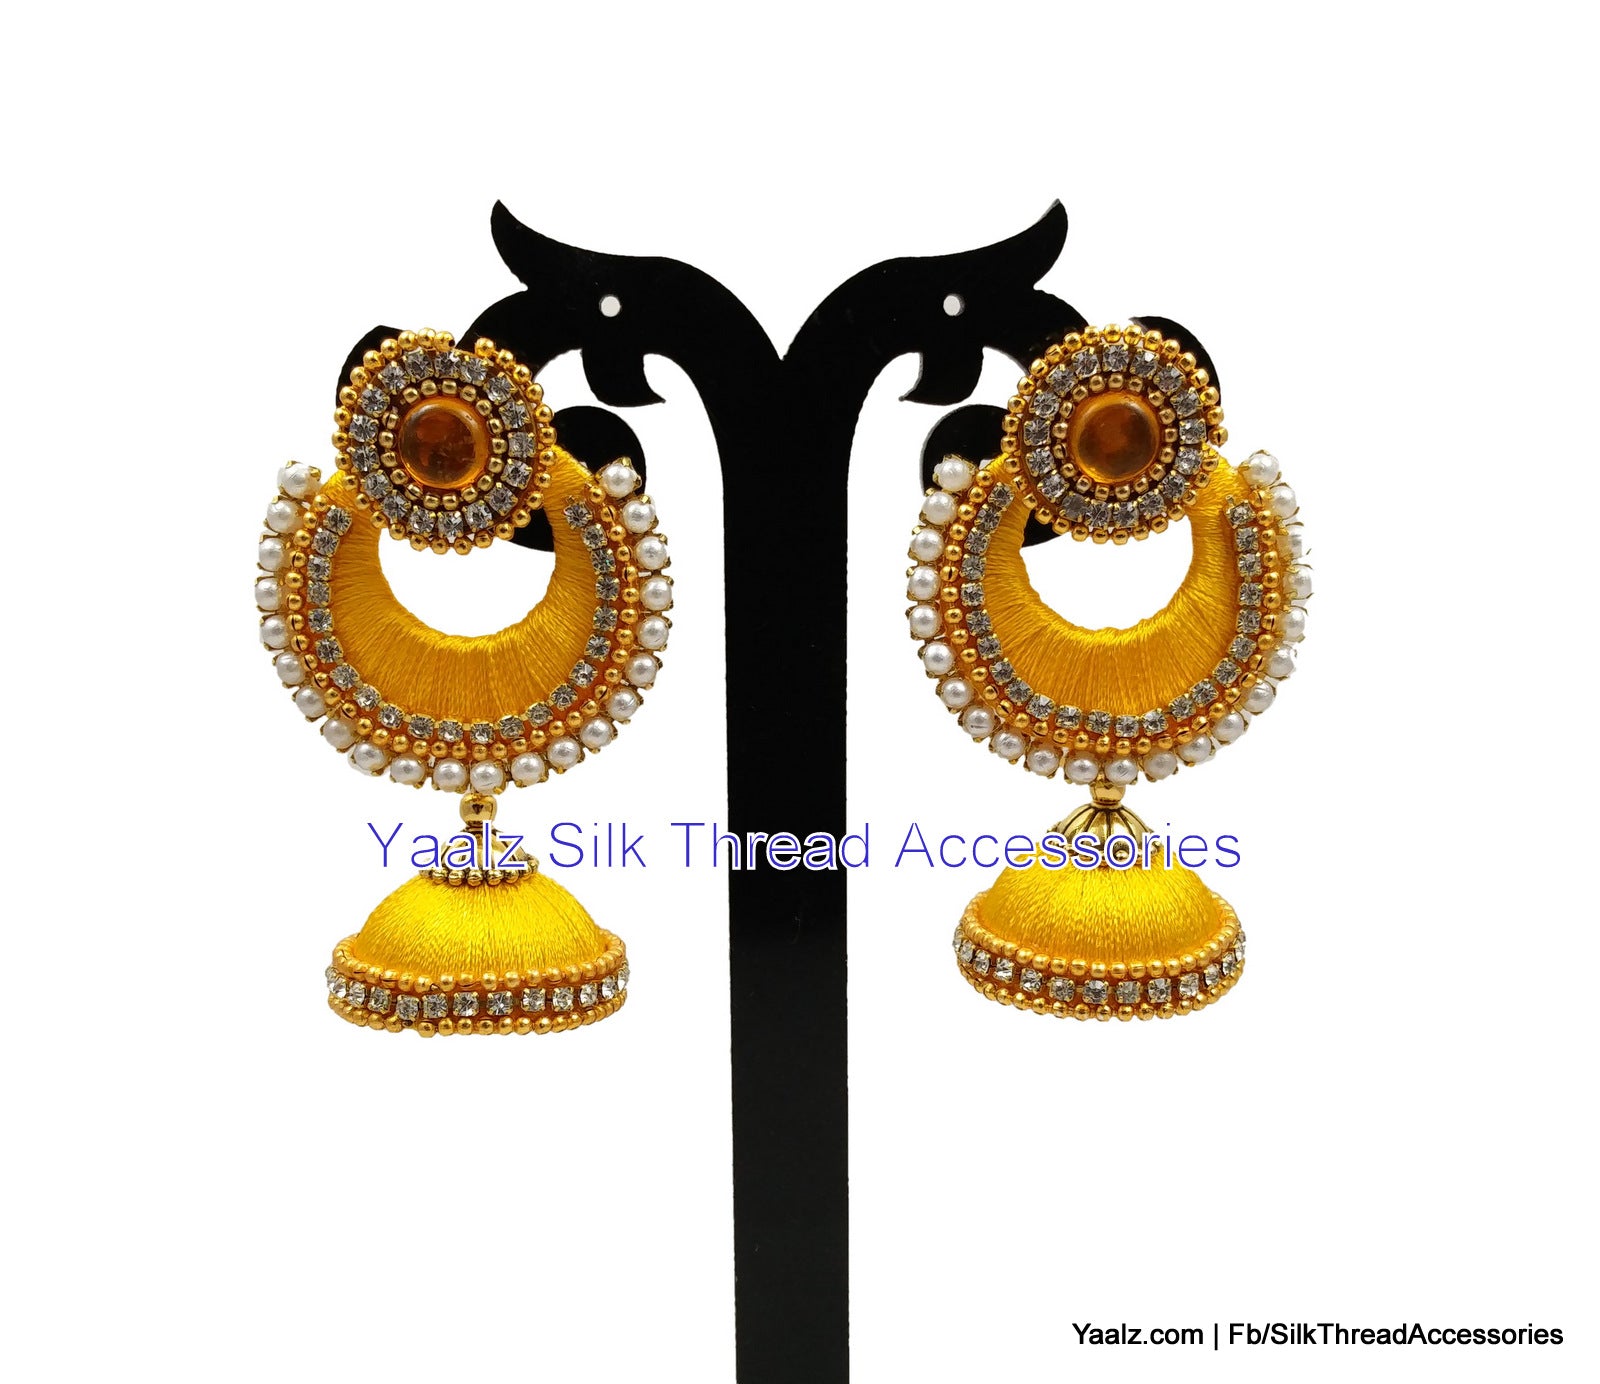 Yaalz Partywear Chand Bali Jhumka Earring in Golden Yellow Color